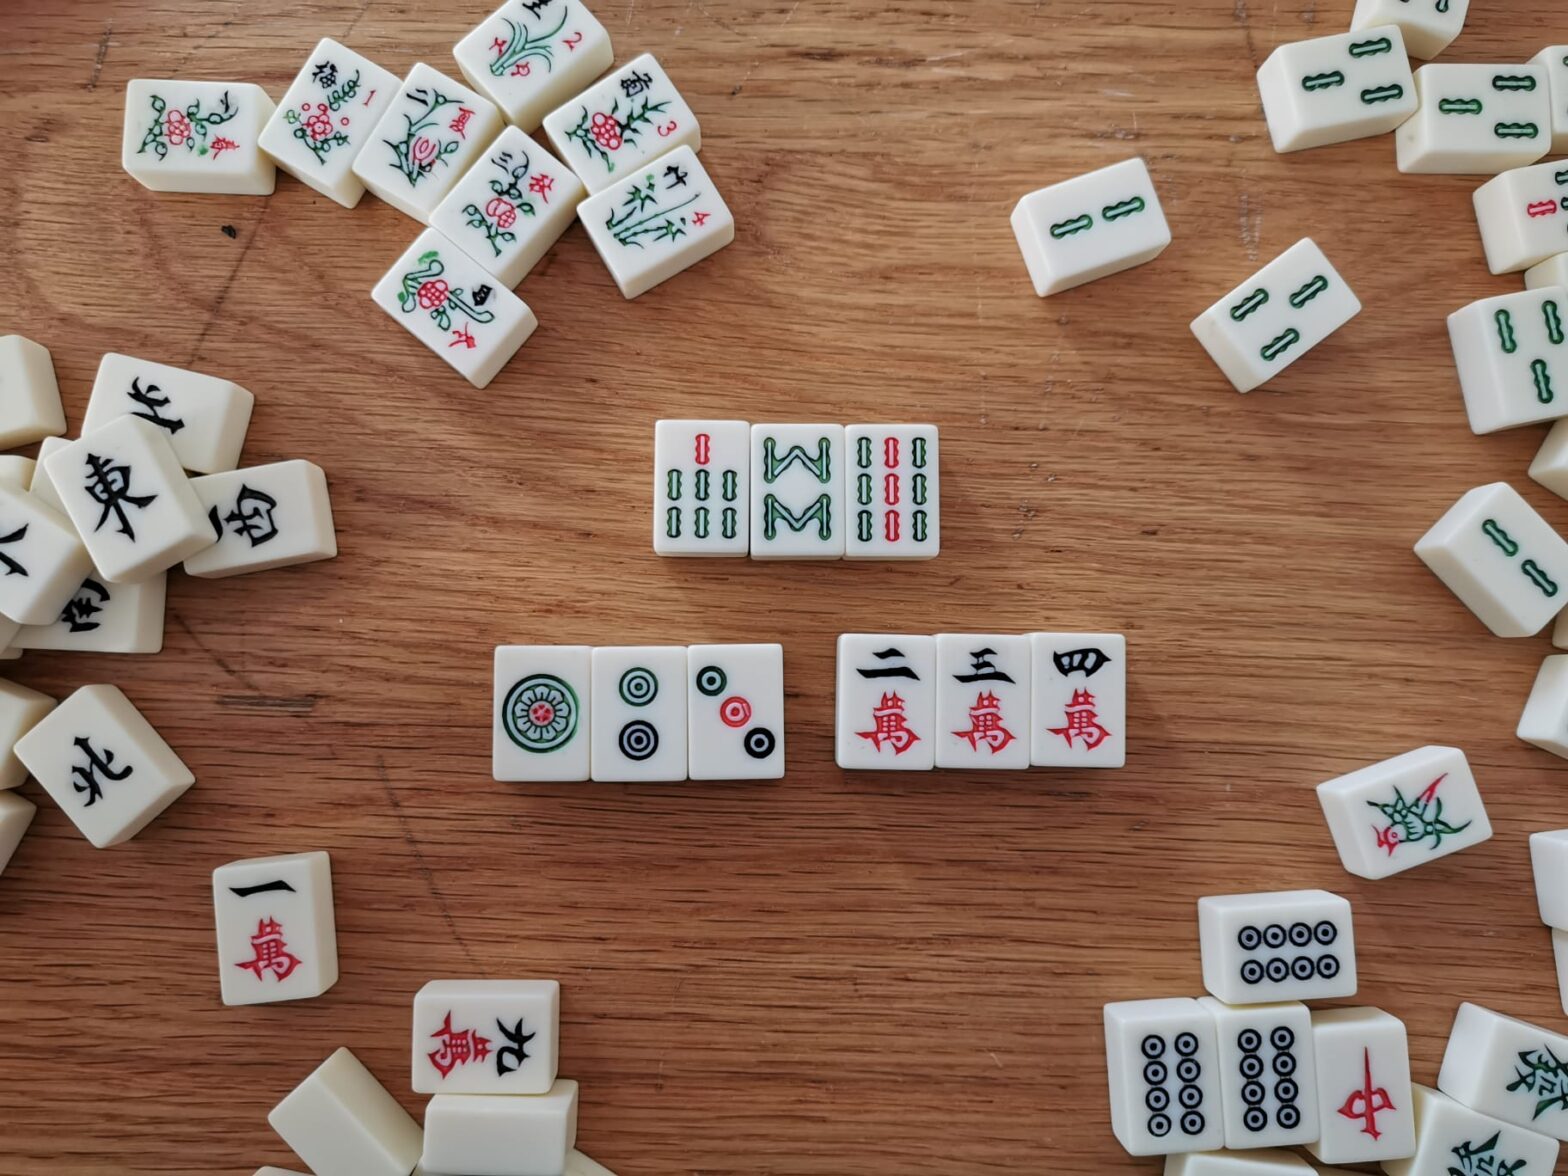 Membahas Permainan Mahjong Online: Memahami Keindahan dan Kompleksitas Permainan